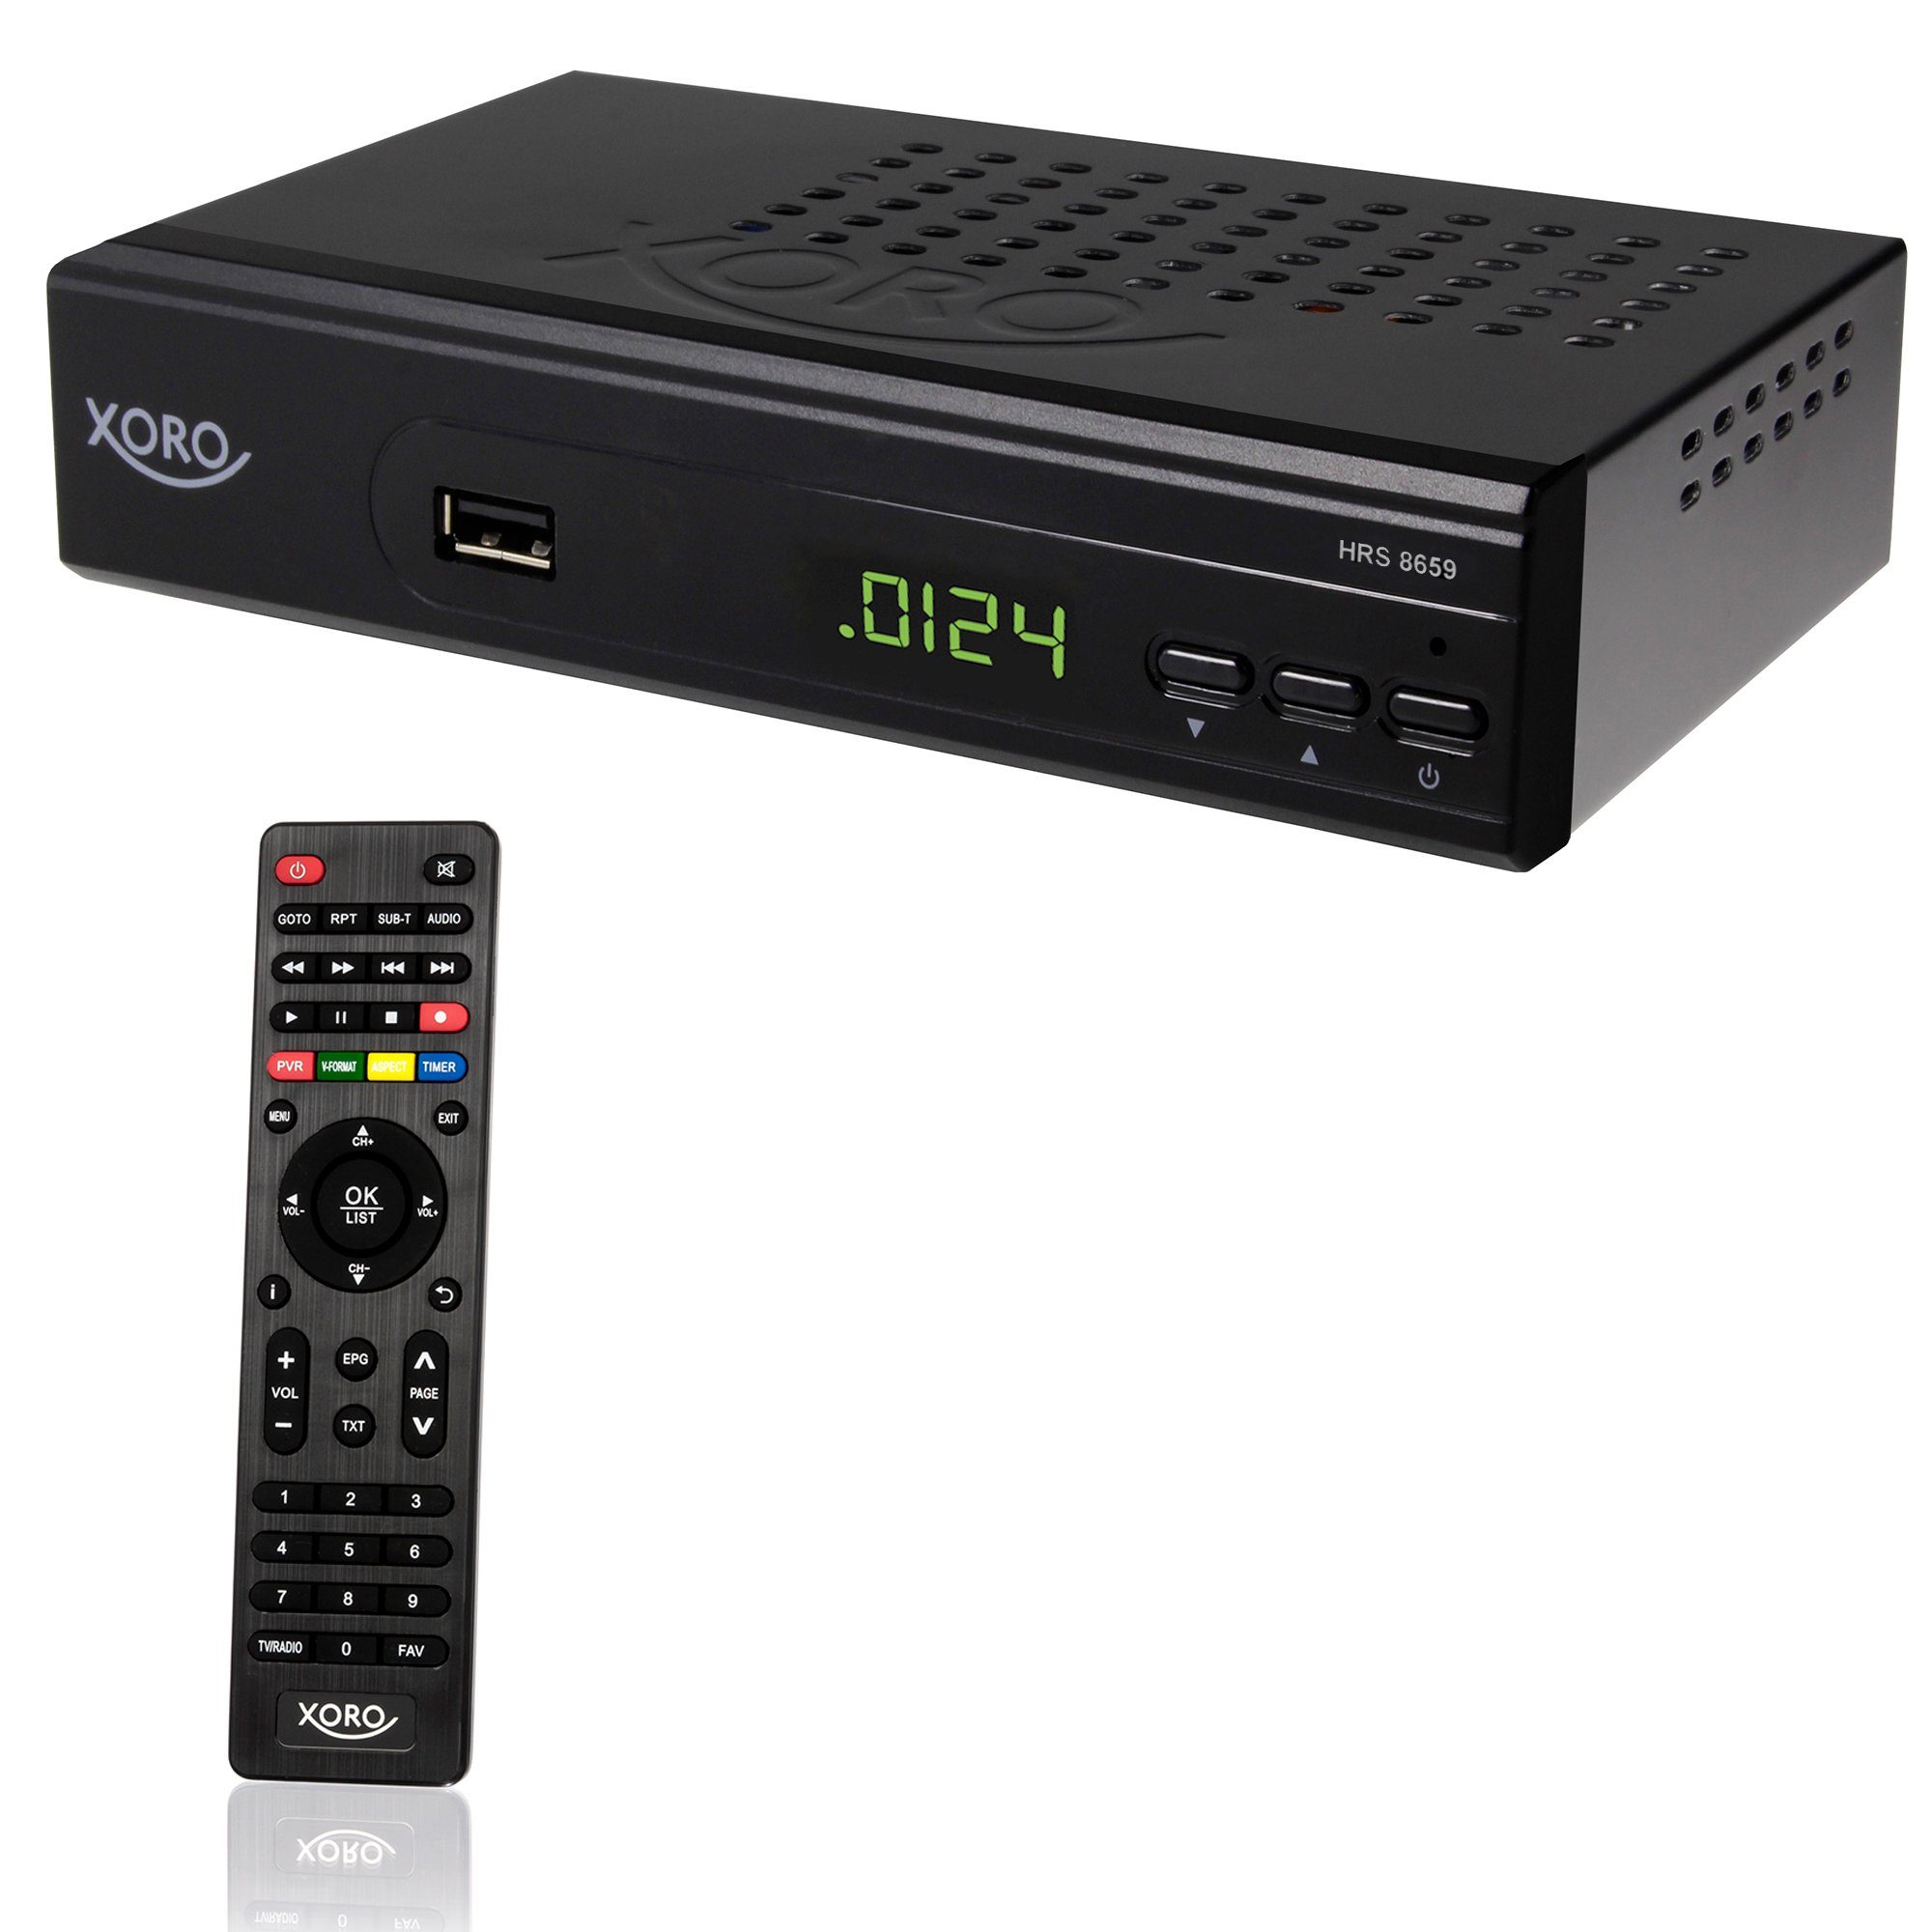 USB (LAN, 2.0) SAT-Receiver DVB-S2 8659 black receiver HDMI, XORO Xoro HRS